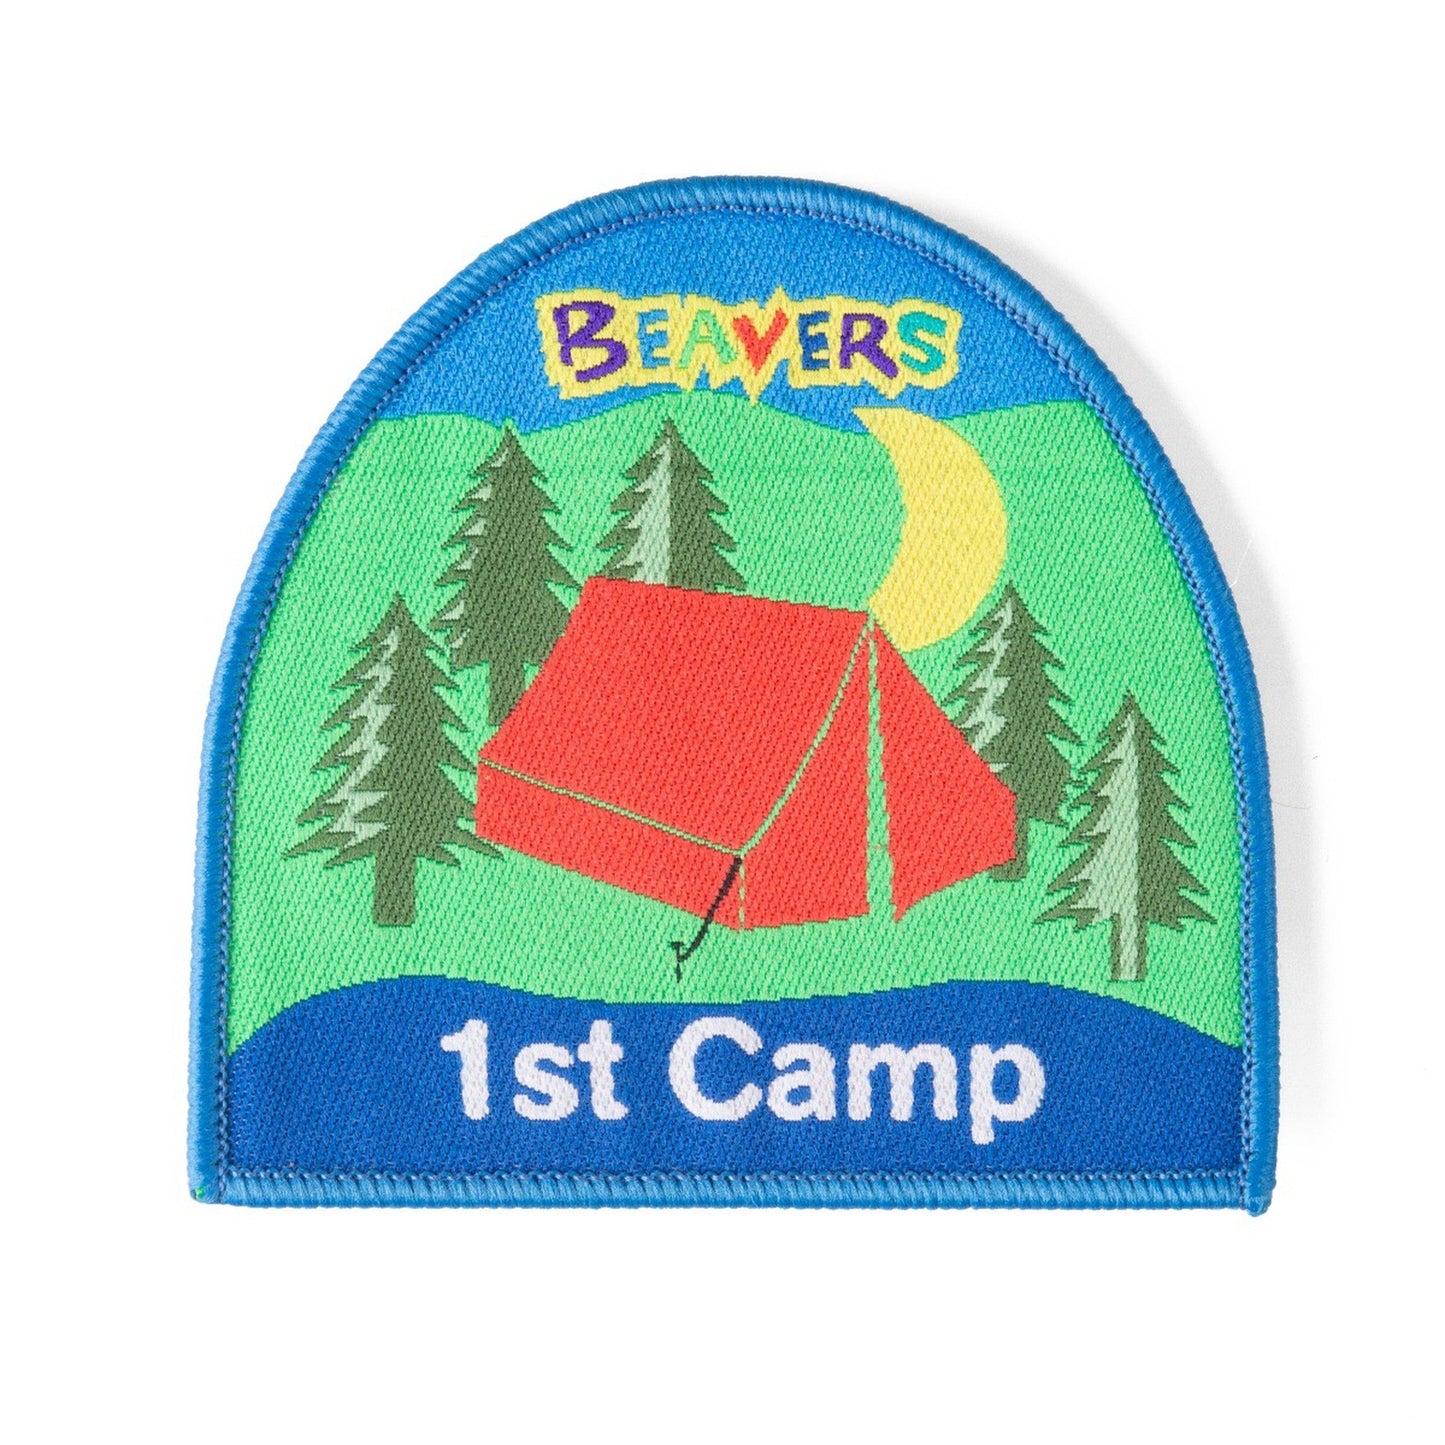 Beaver Scouts 1st Camp Fun Badge